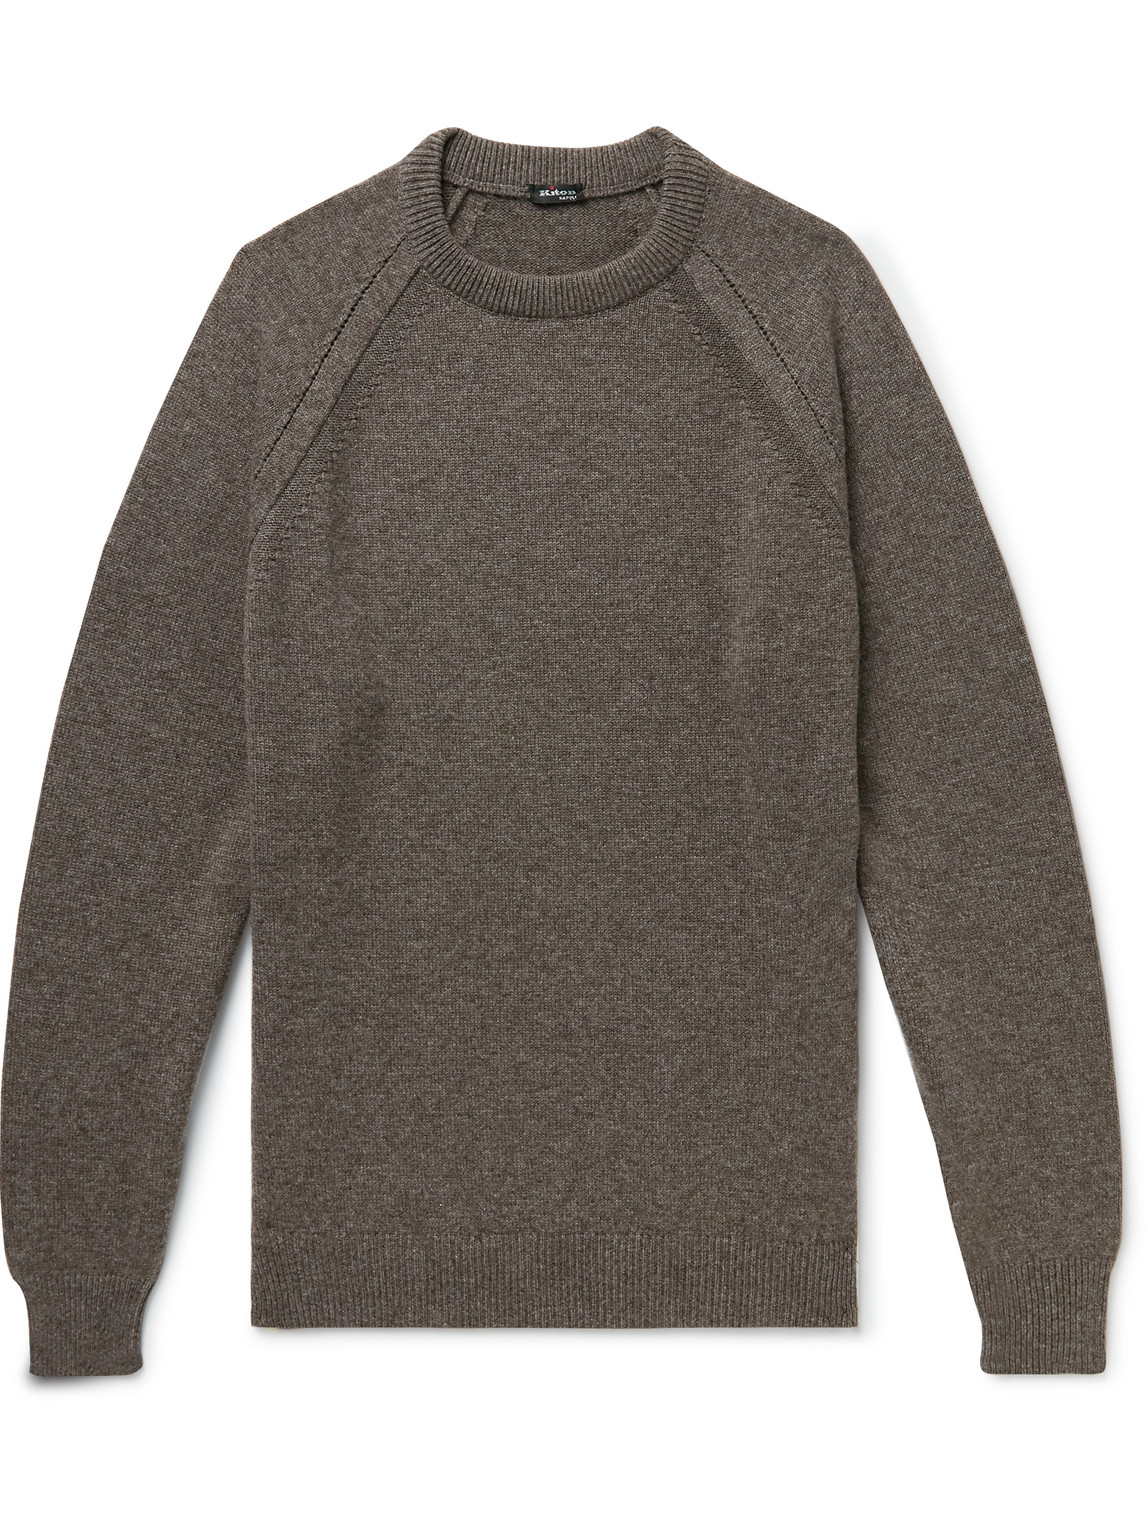 Kiton Cashmere Sweater In Brown